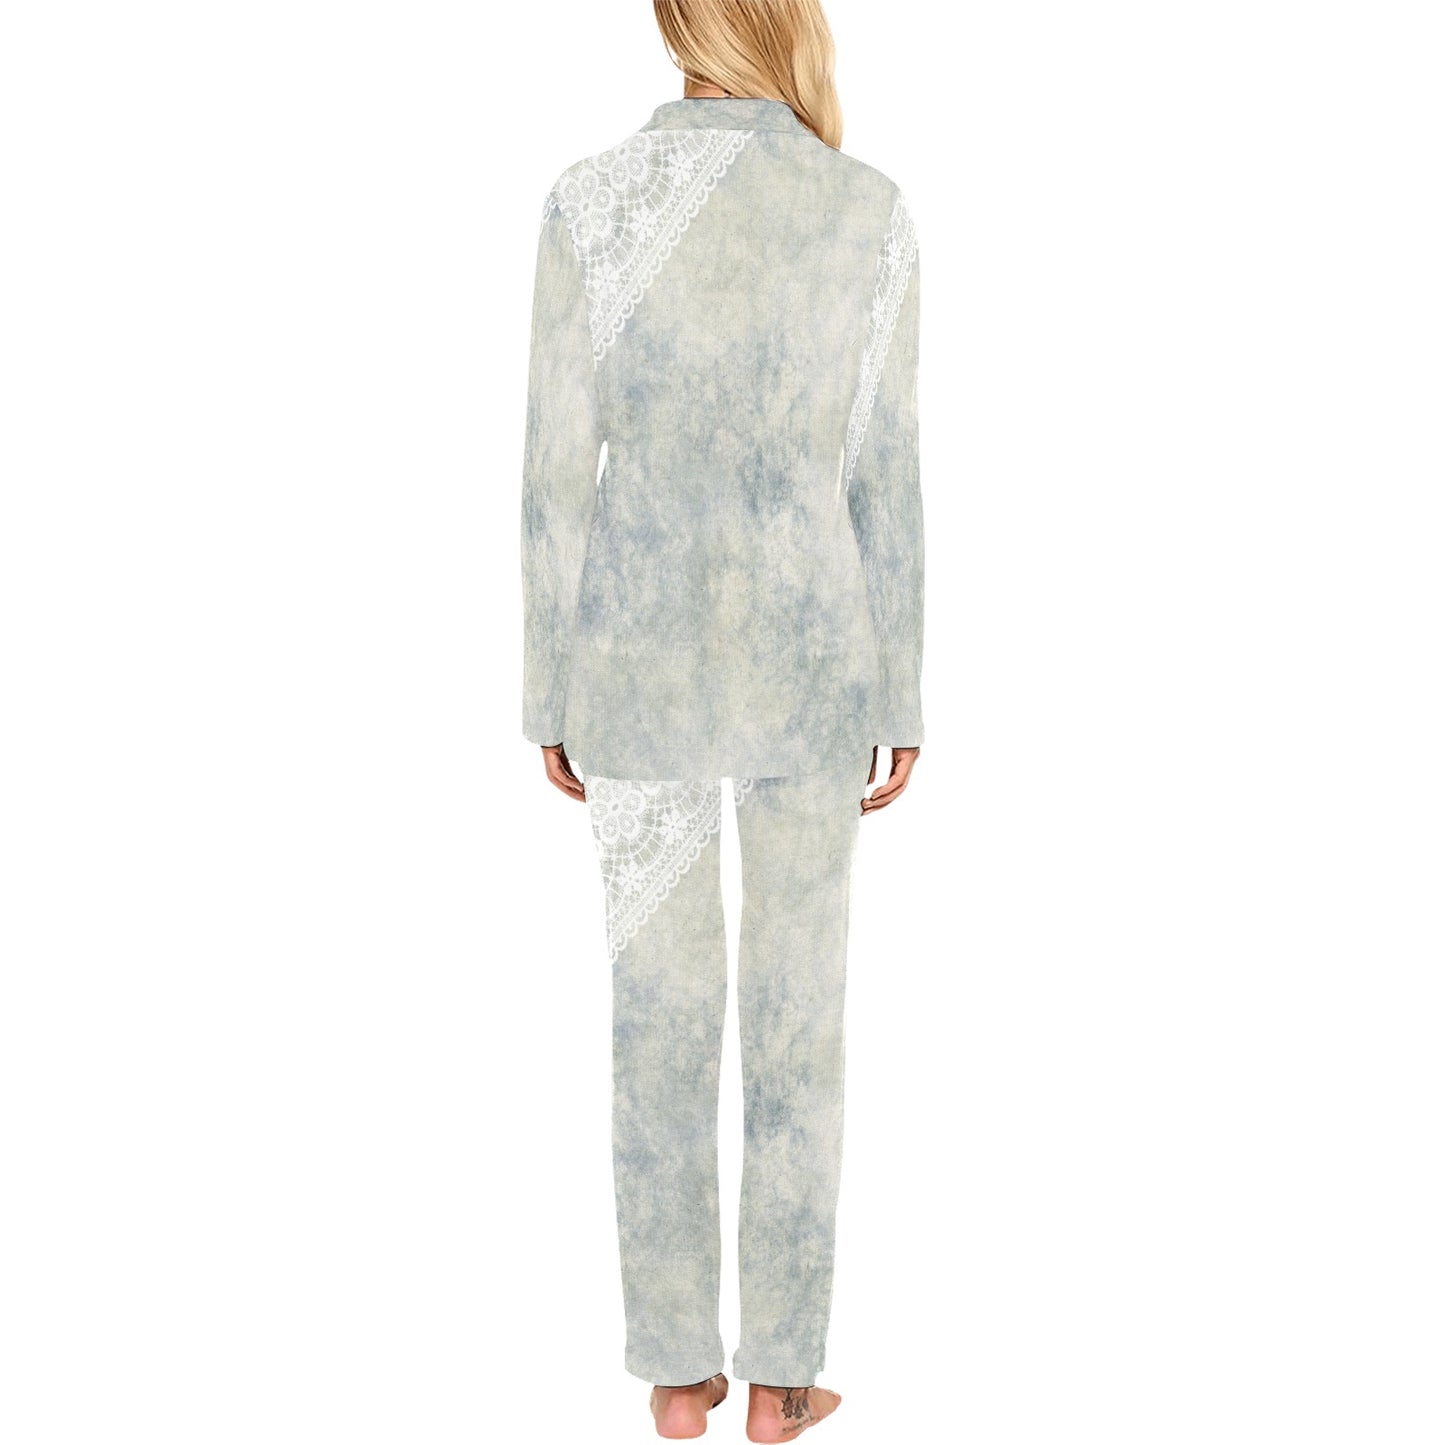 Victorian printed lace pajama set, design 36 Women's Long Pajama Set (Sets 02)